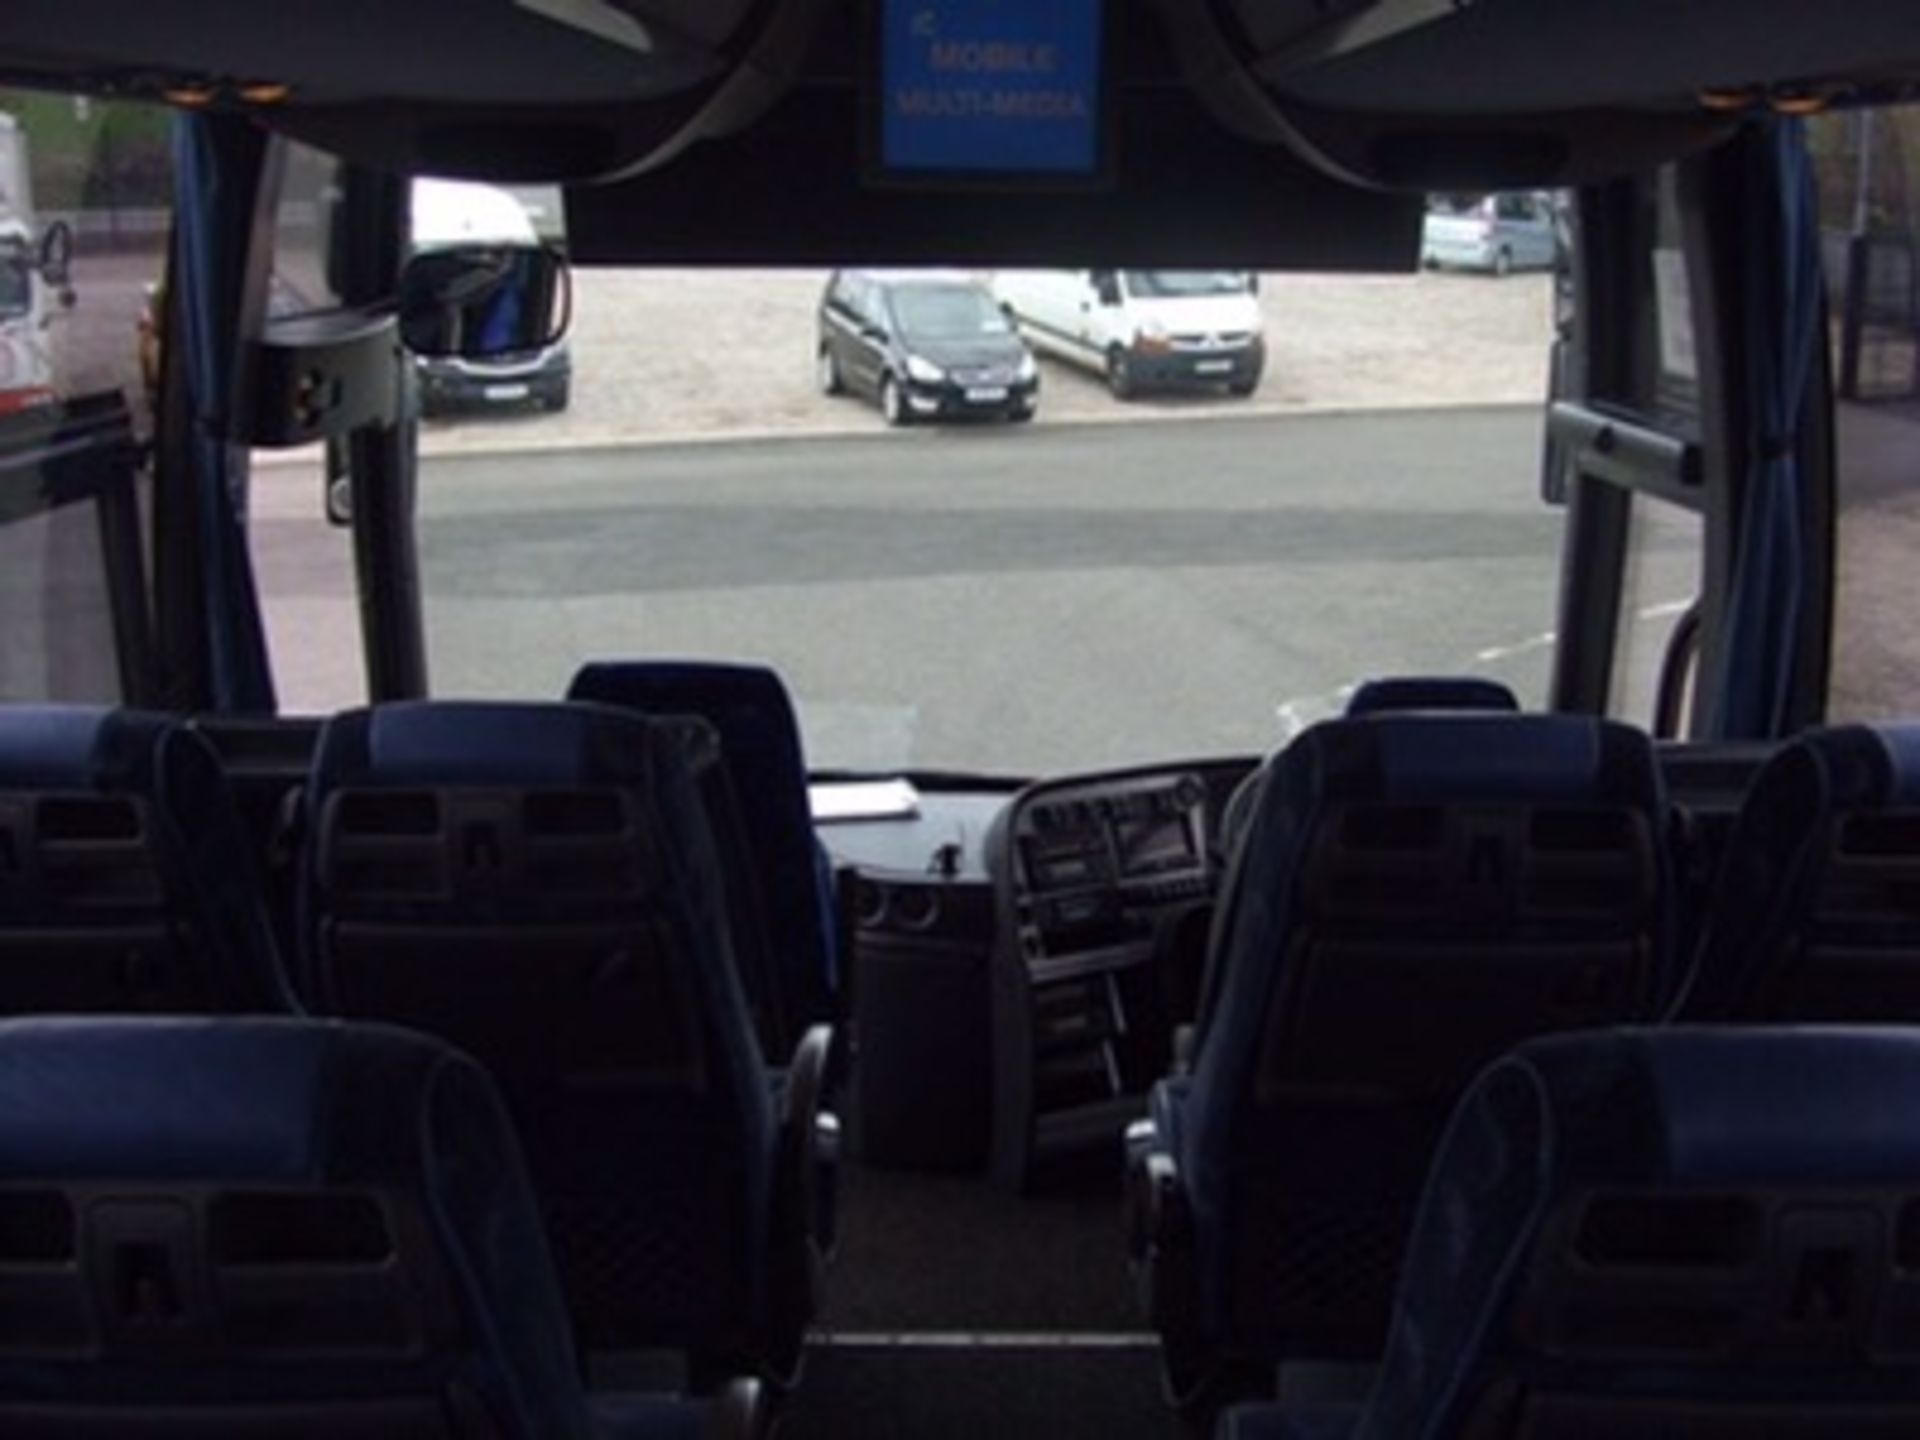 2010 Volvo 9700 BI2B 49/51 Seat Luxury Coach - Image 21 of 28